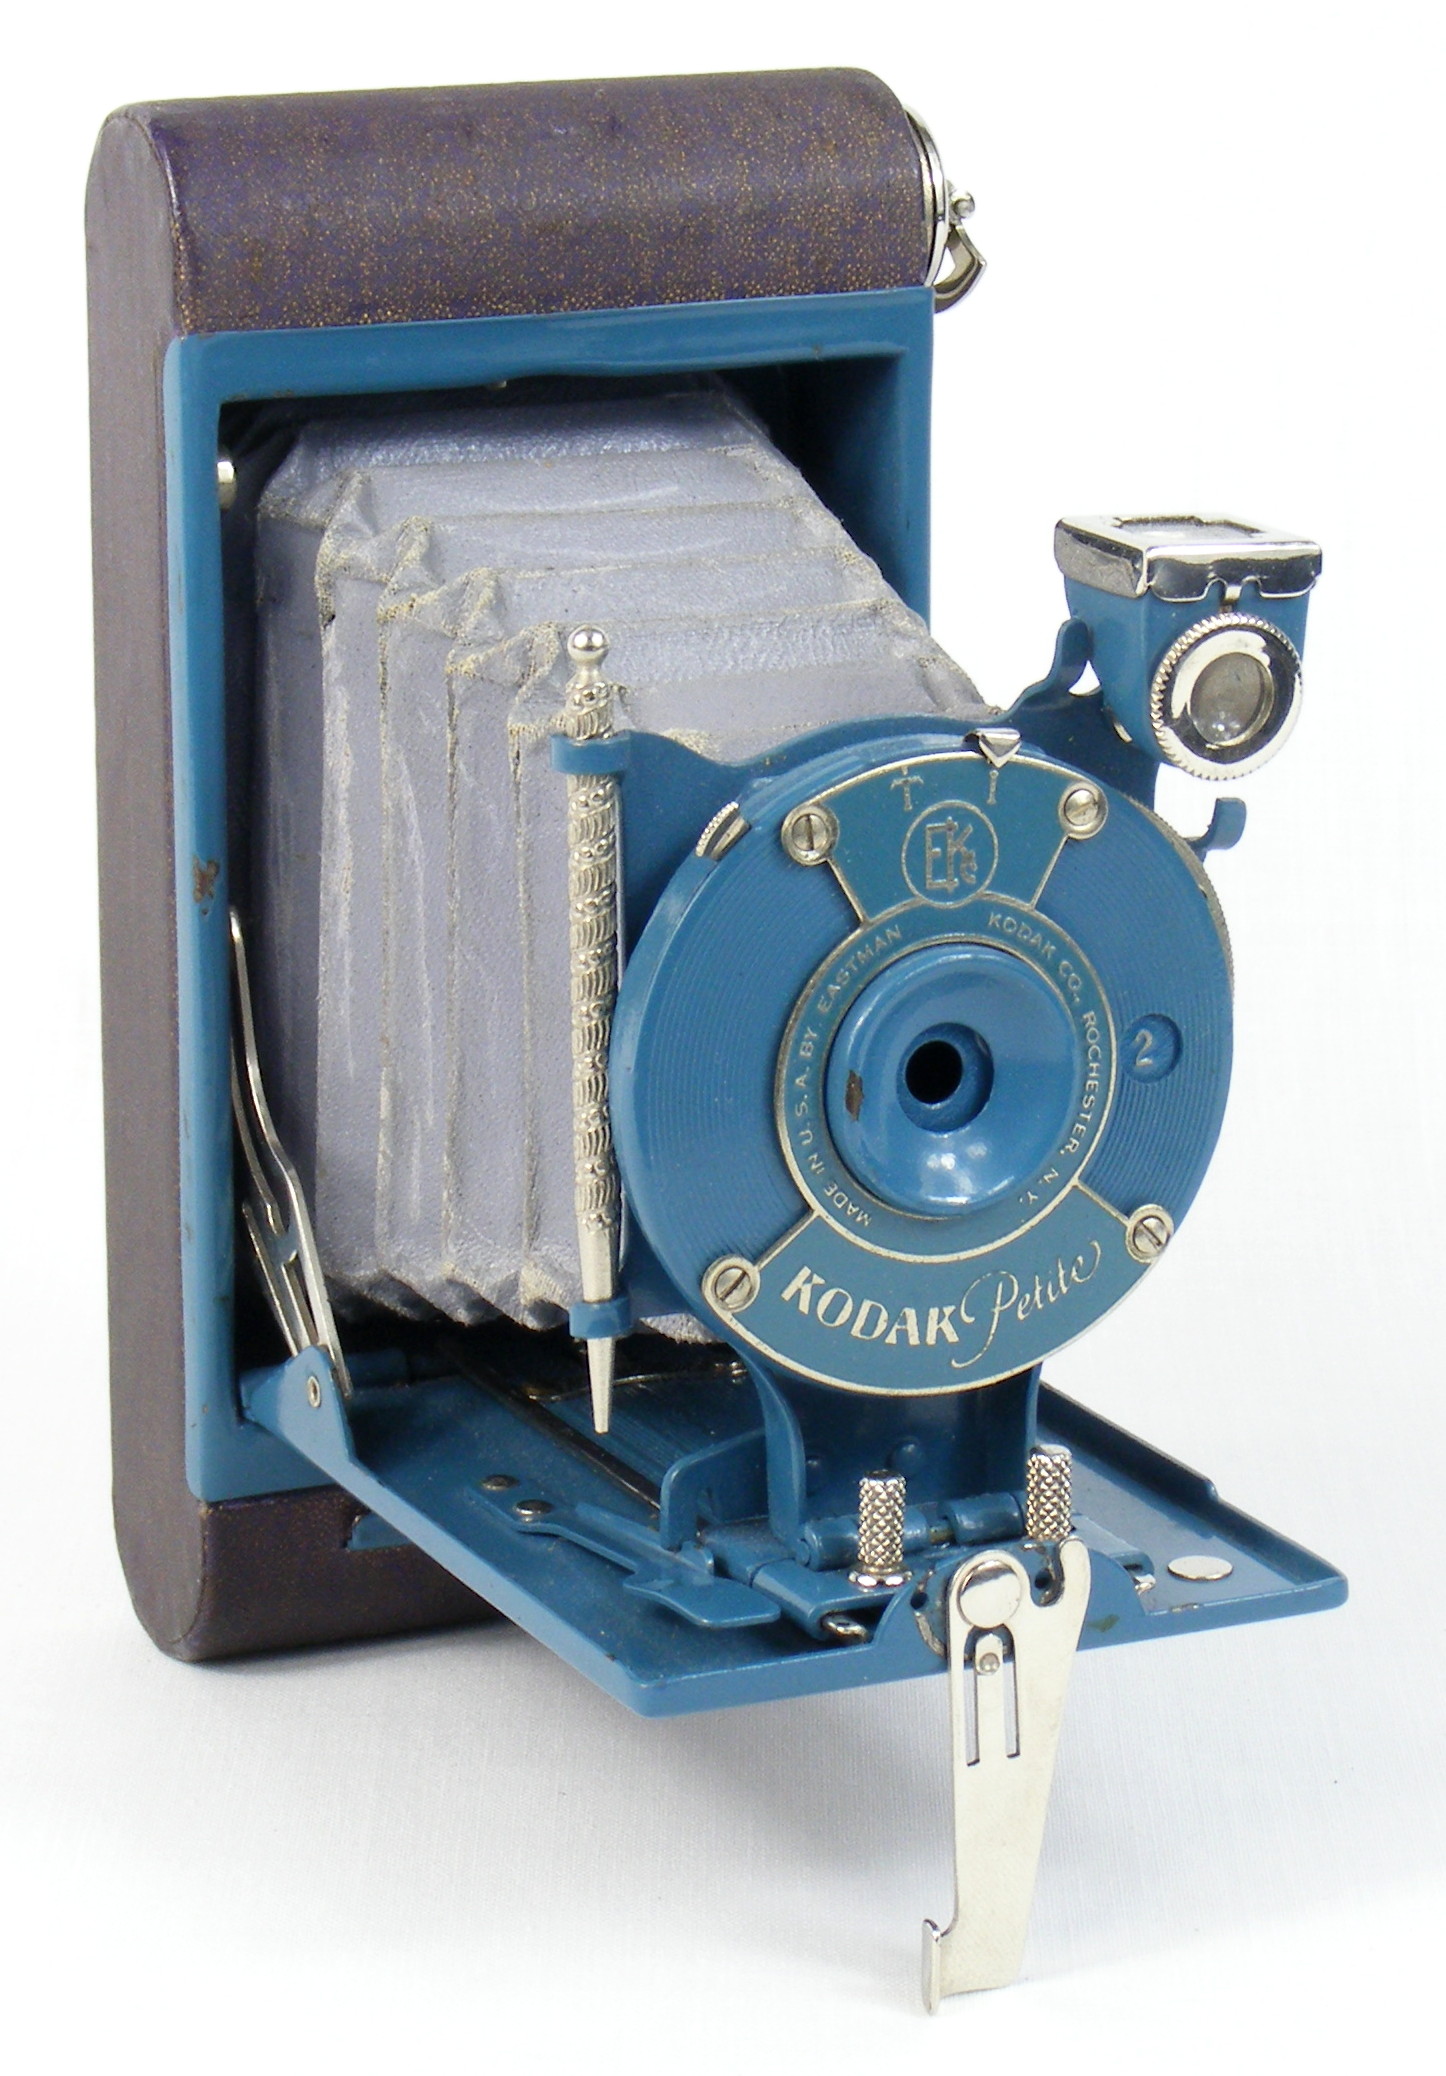 Image of Kodak Petite folding camera (Lavender)